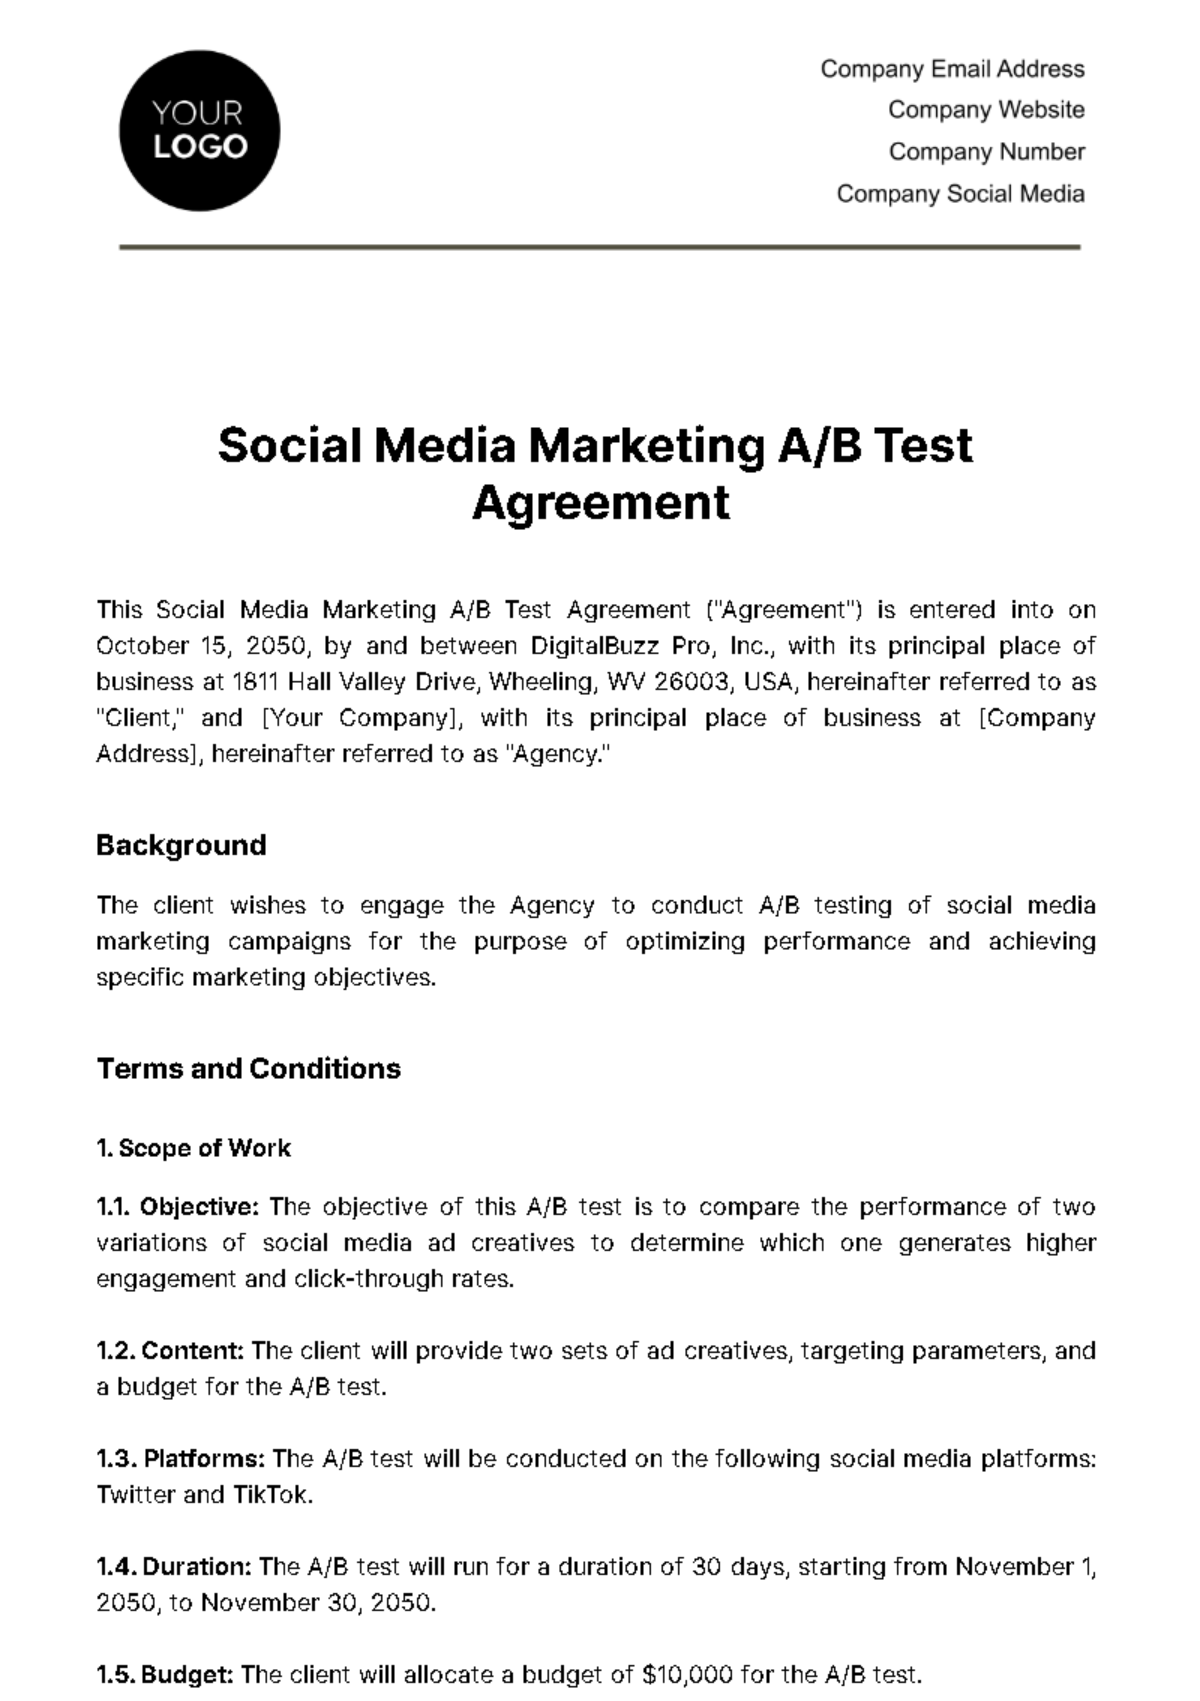 Free Social Media Marketing A/B Test Agreement Template